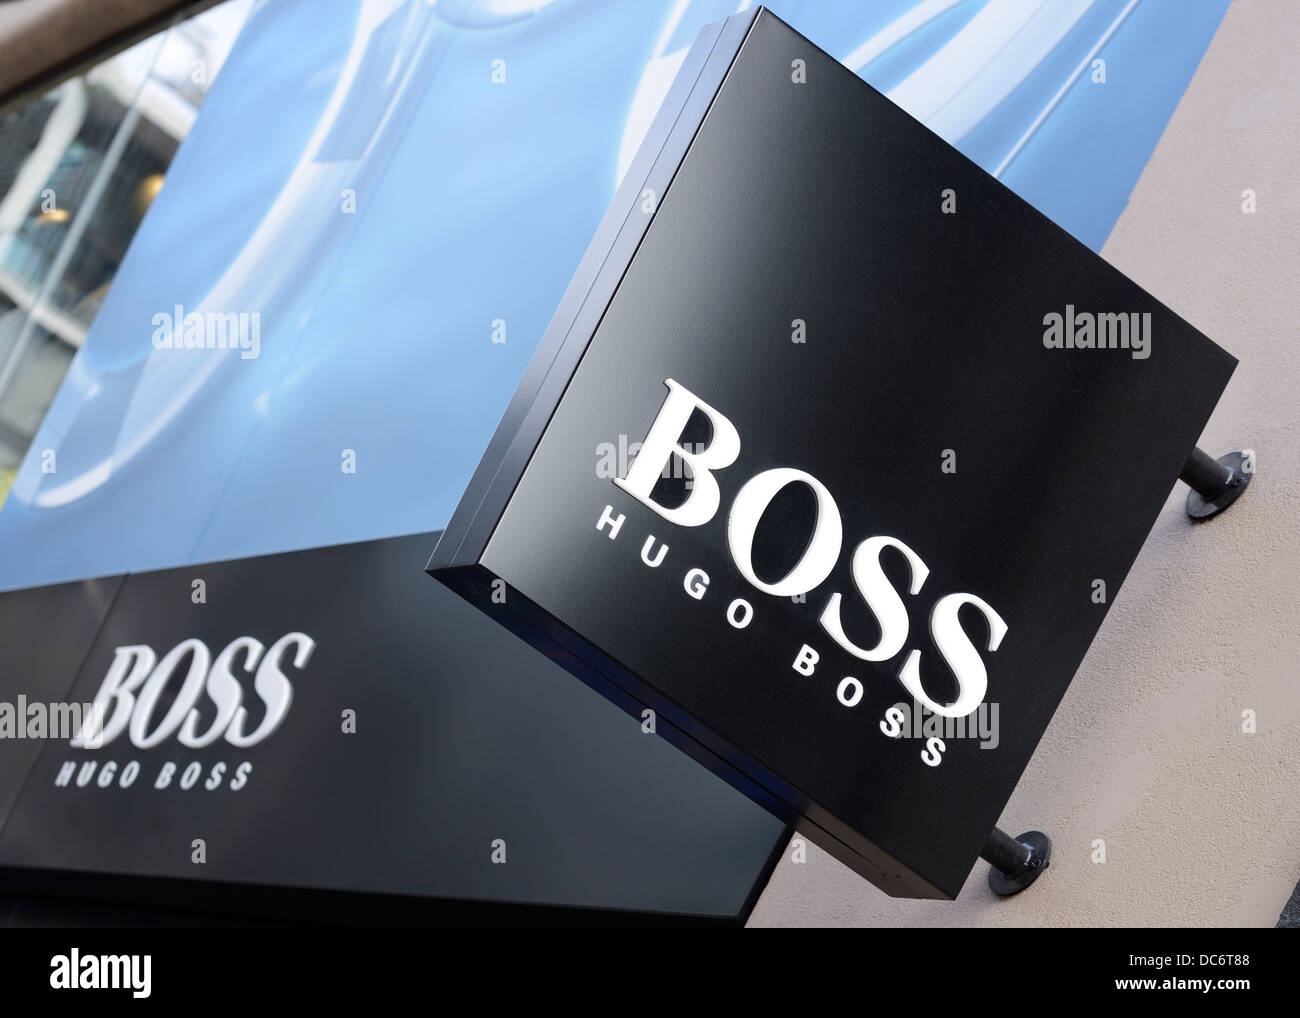 Hugo Boss Shop Sign, Oxford Street, London, UK Stock Photo - Alamy